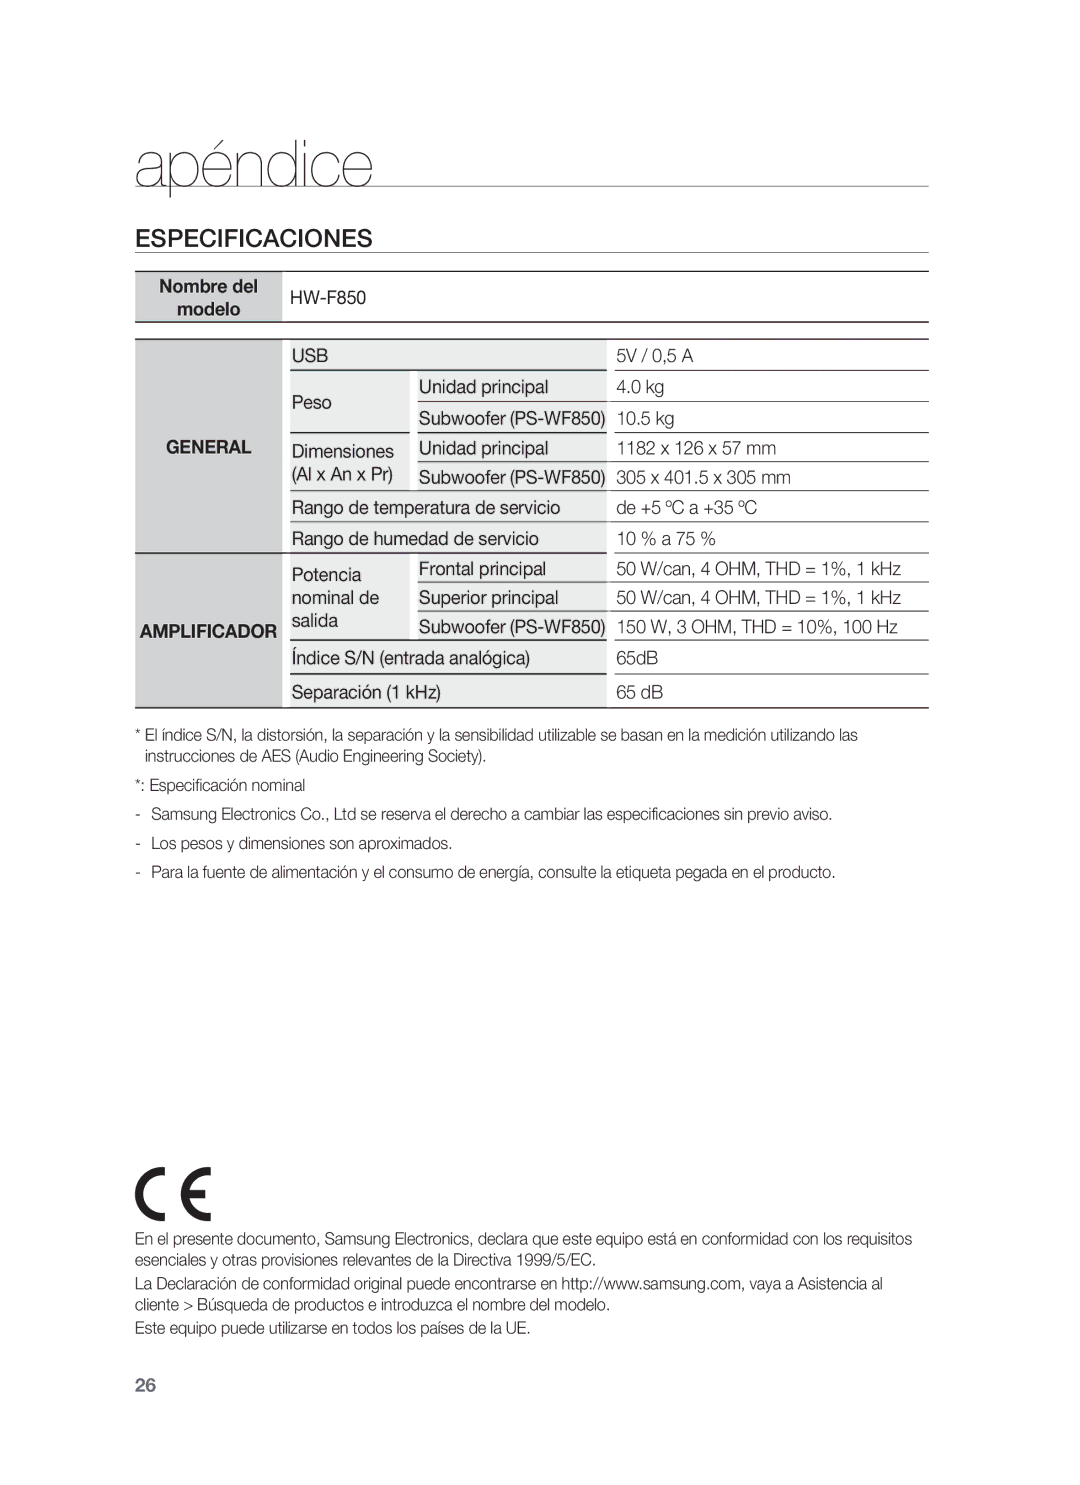 Samsung HW-F850/ZF manual Apéndice, Especificaciones, Subwoofer PS-WF850, General, Amplificador 